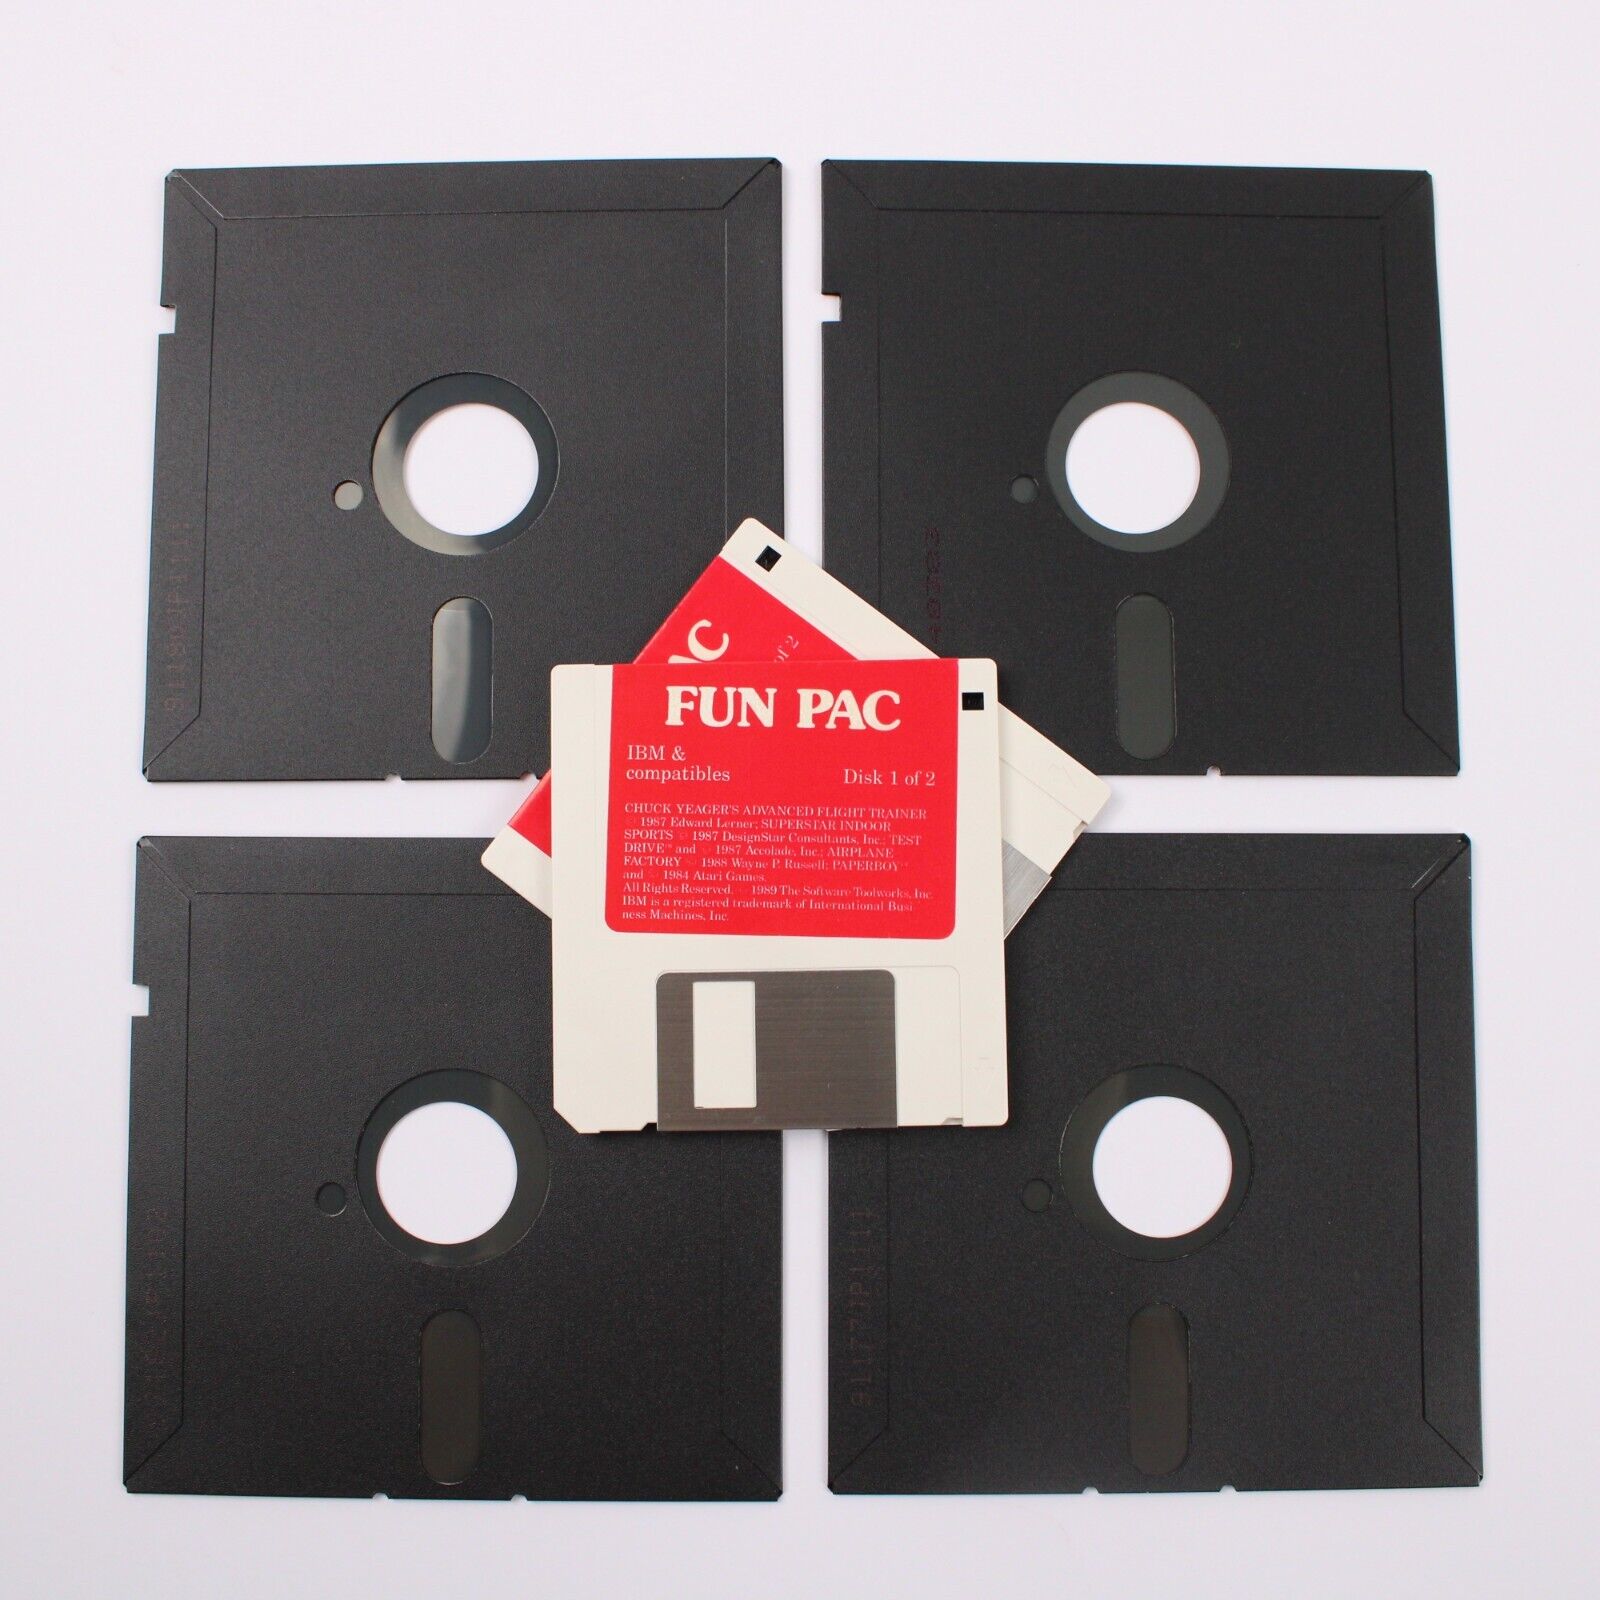 Vintage 6 Fun Pac Program Diskettes IBM & Compatibles Flexible Floppy Disk